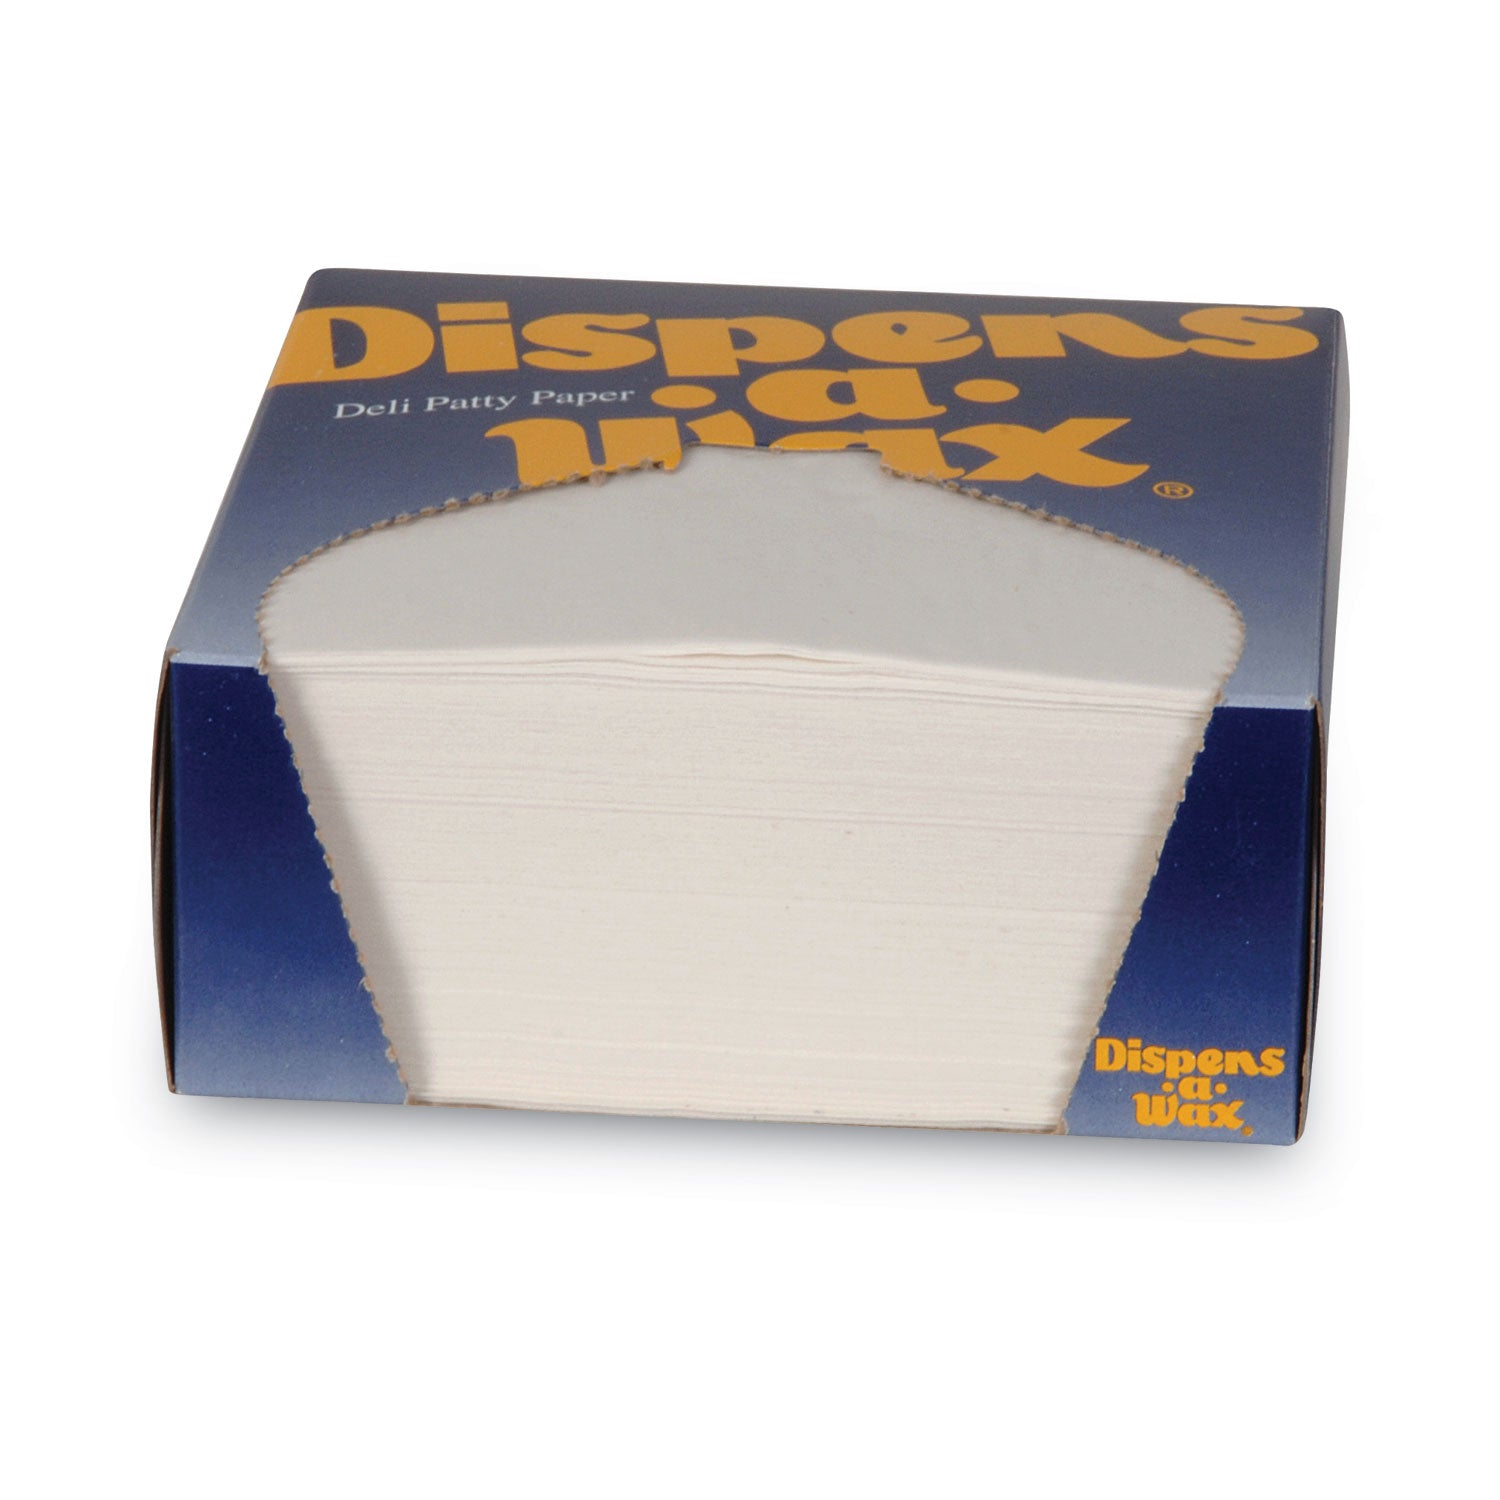 dispens-a-wax-waxed-deli-patty-paper-475-x-5-white-1000-box-24-boxes-carton_dxe434 - 1